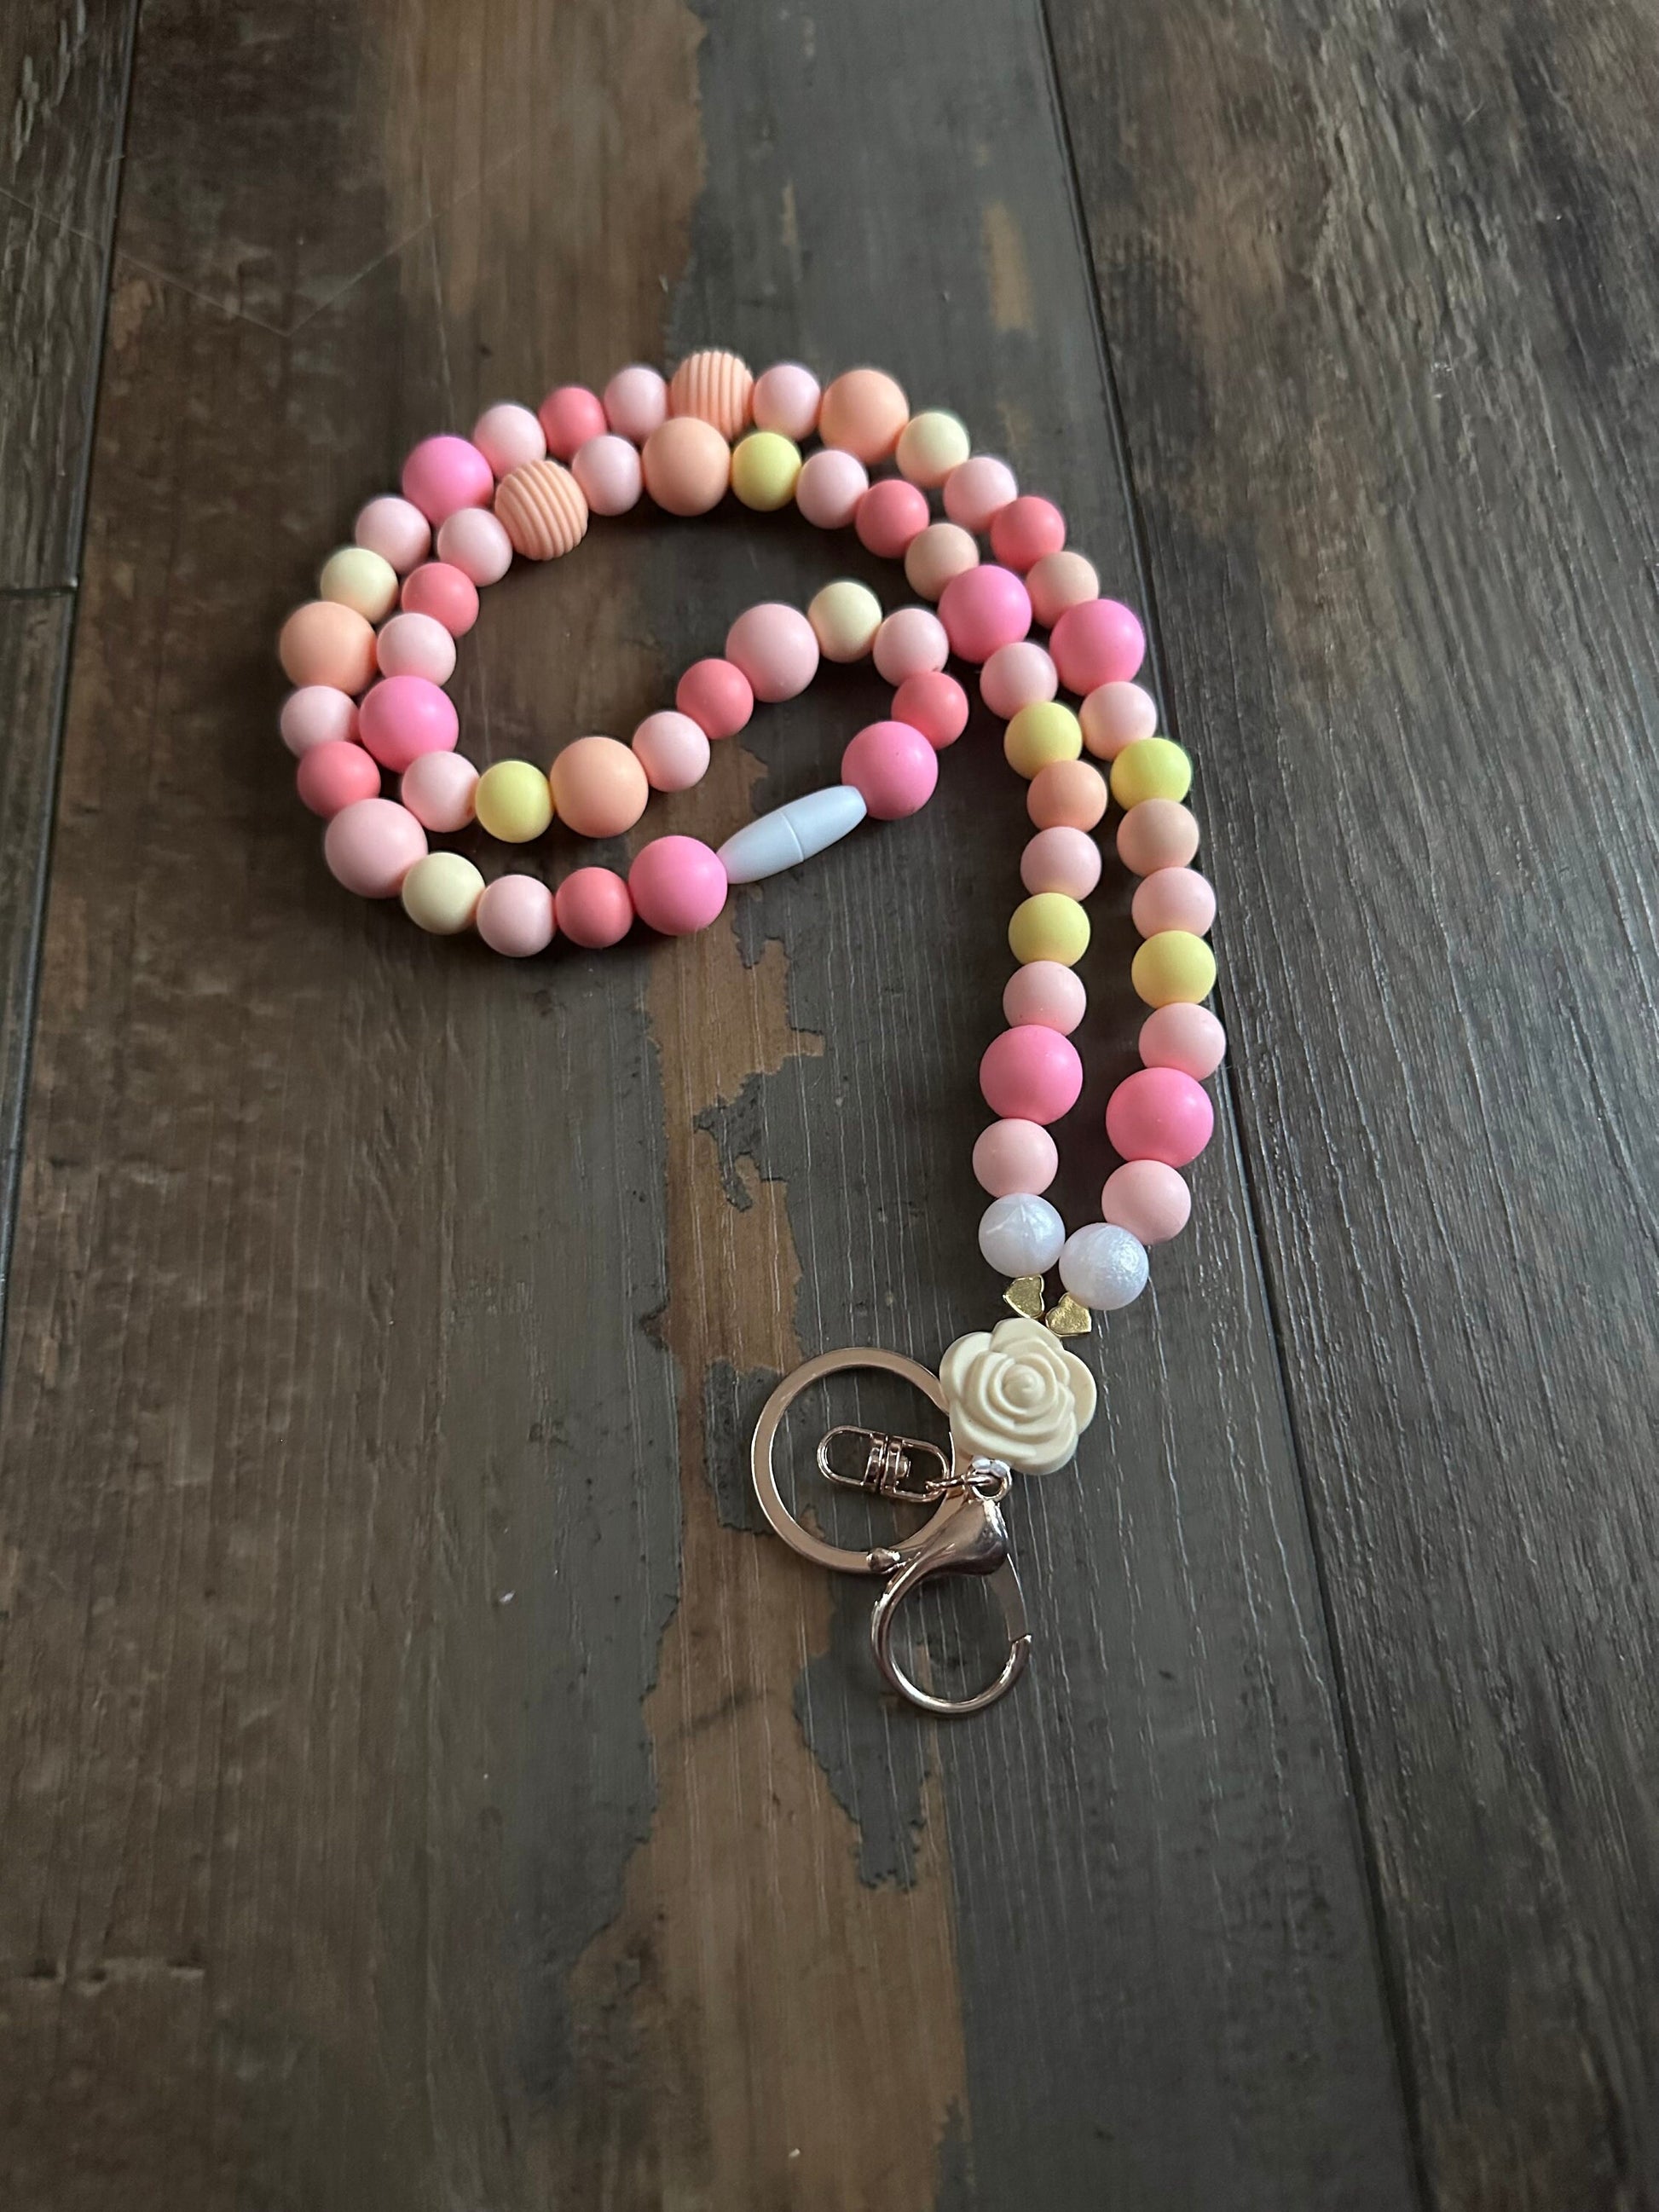 Silicone bead pink sunset pattern lanyard for teachers nurses id badge holder customizable lanyard teacher appreciation gift school supply